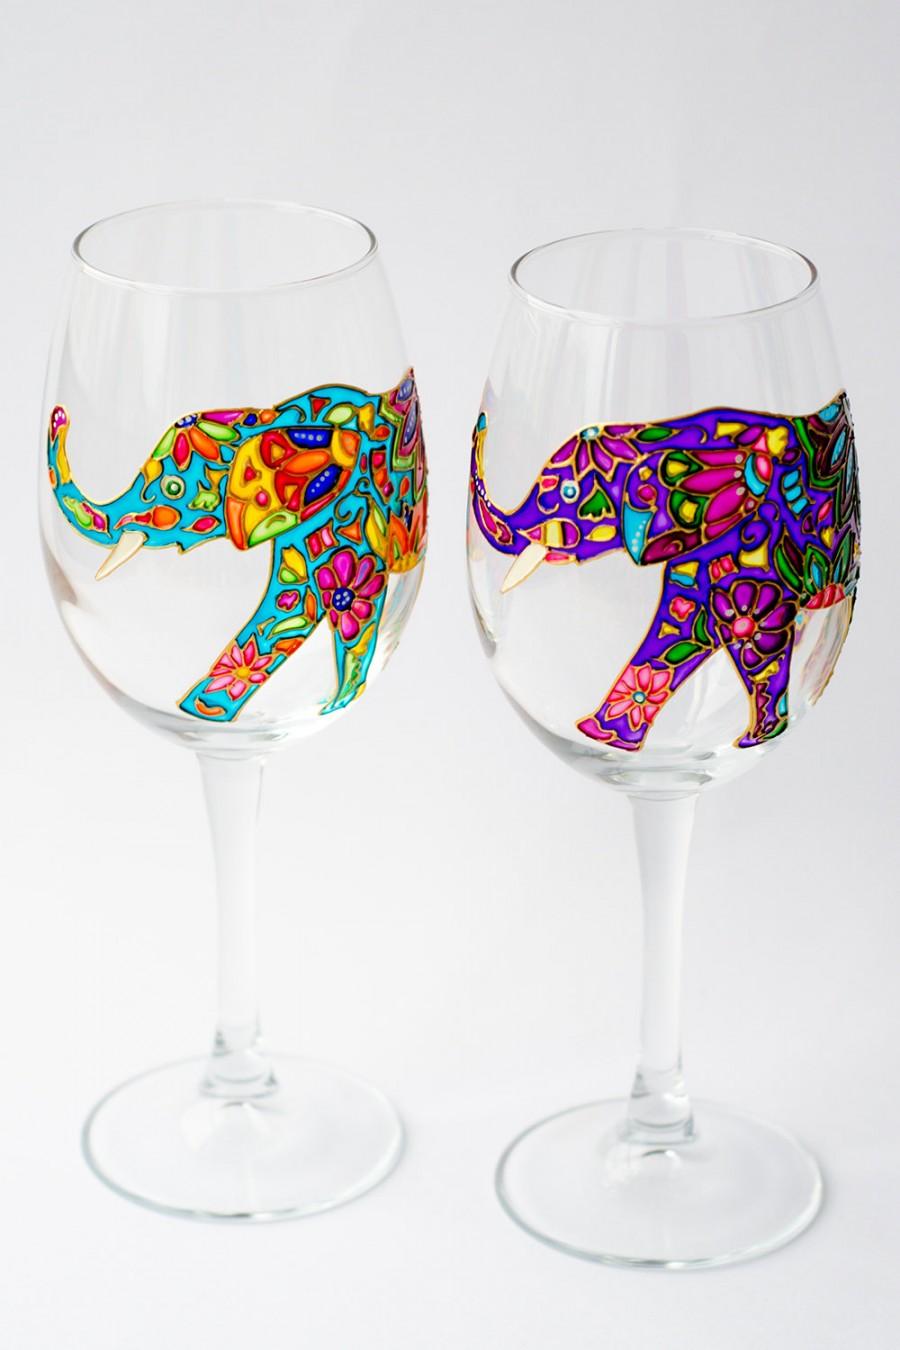 Hochzeit - Elephant Wine Glasses Hand Painted, Wine glass for Bridesmaid Wedding Glasses, Bohemian Elephant, Toasting glasses - $54.50 USD